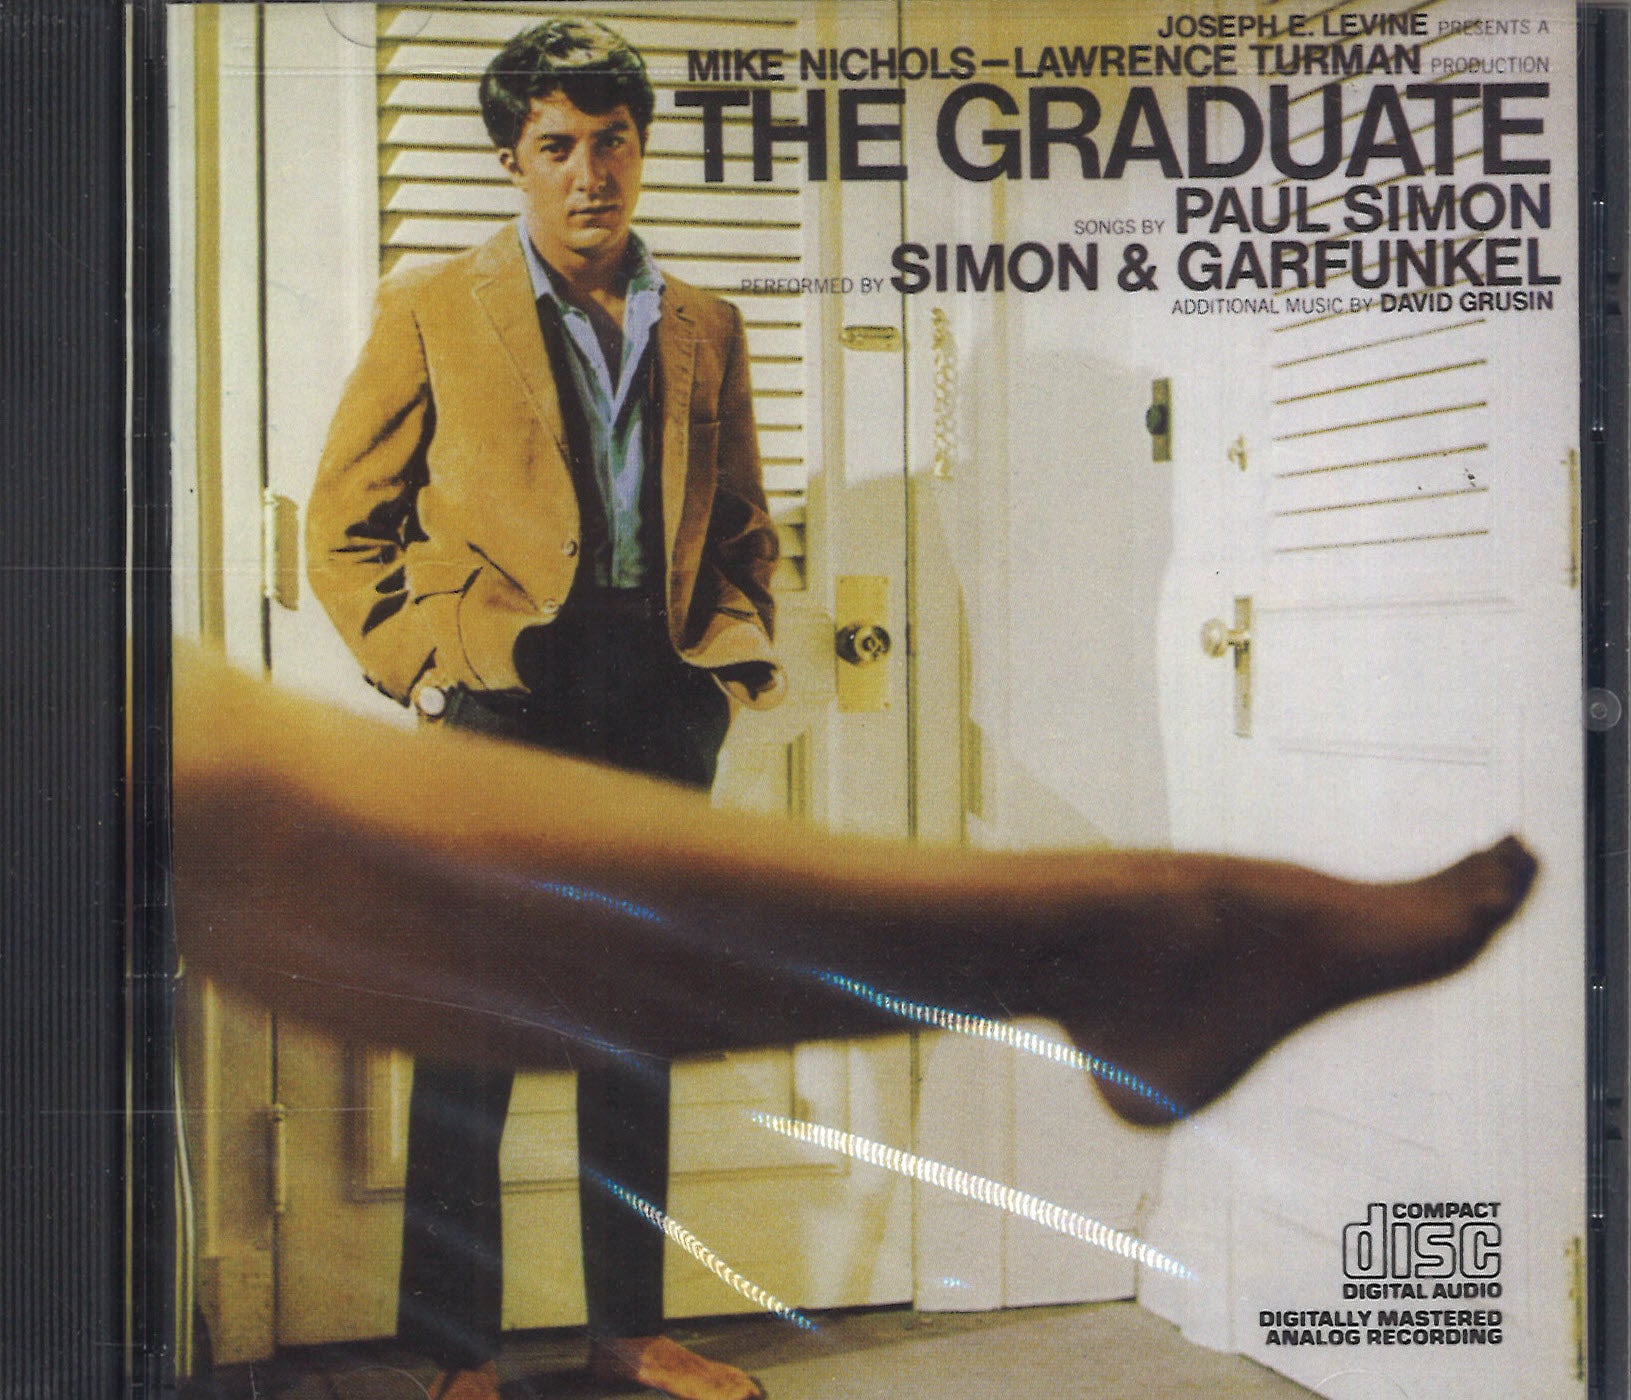 Simon & Garfunkel The Graduate (Music From The Original Motion Picture Soundtrack)